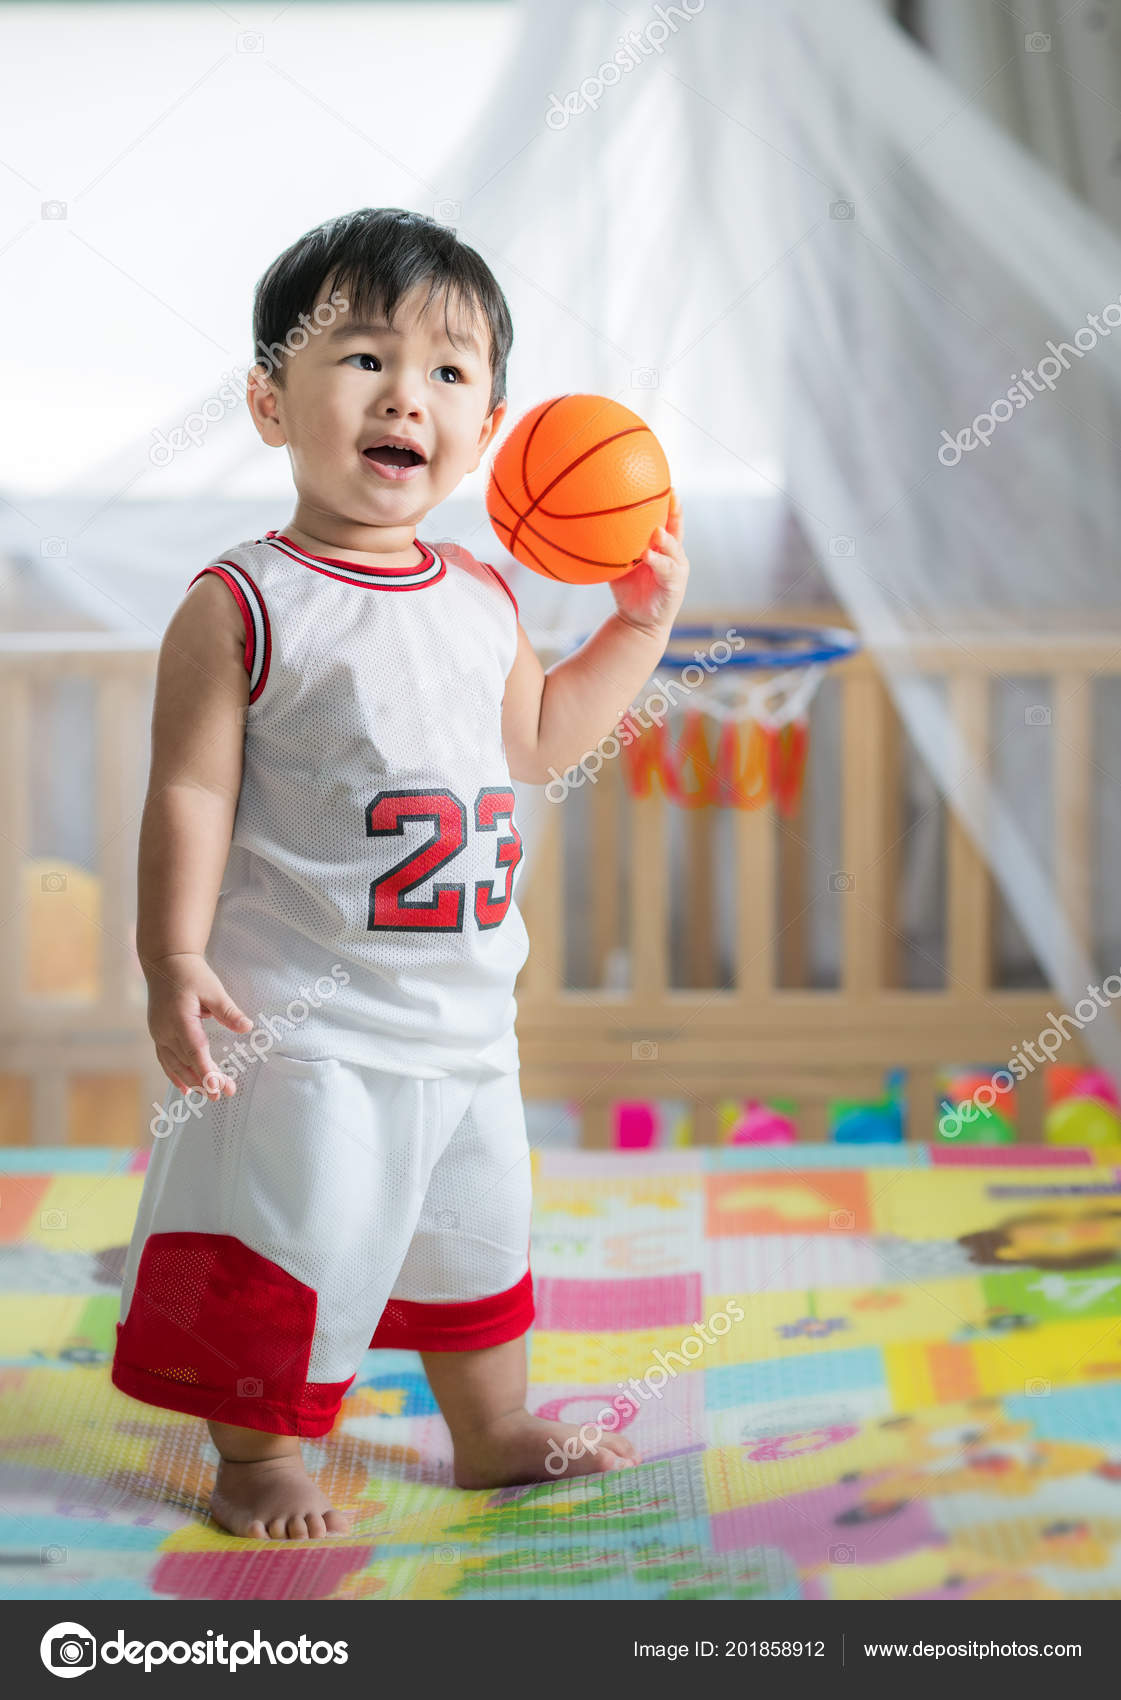 newborn basketball jersey